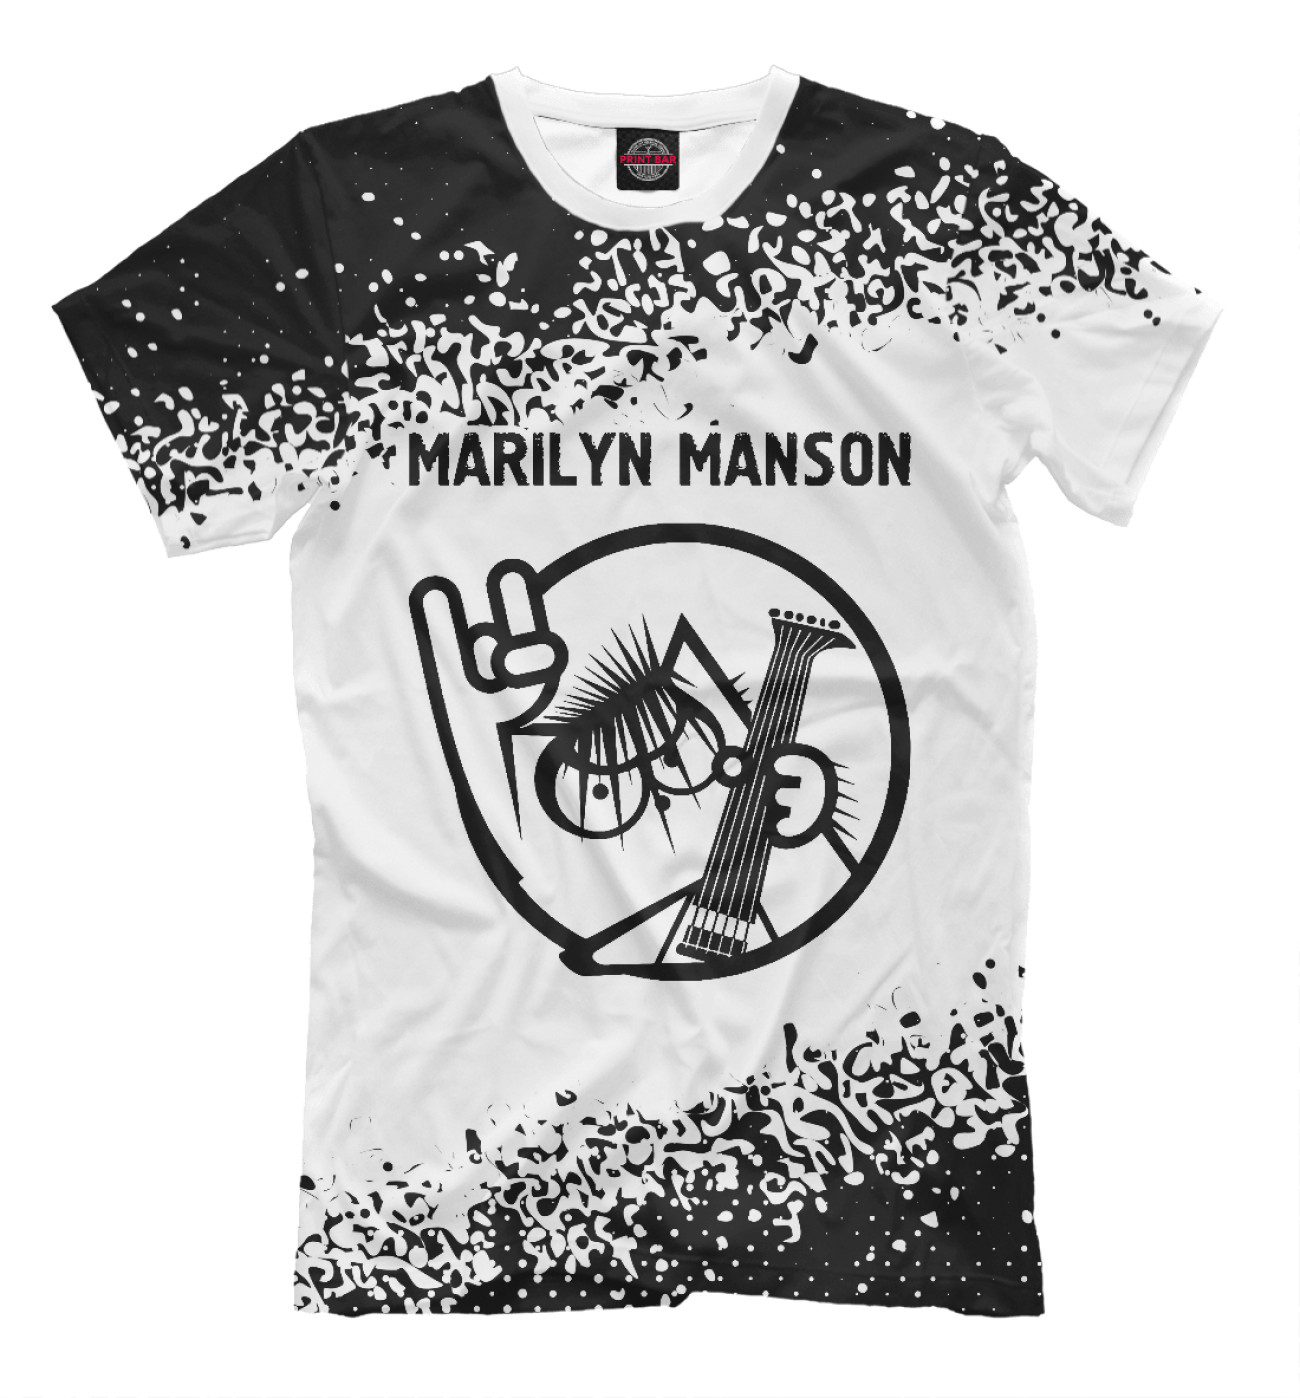 Мужская Футболка Marilyn Manson / Кот, артикул: MRM-389246-fut-2